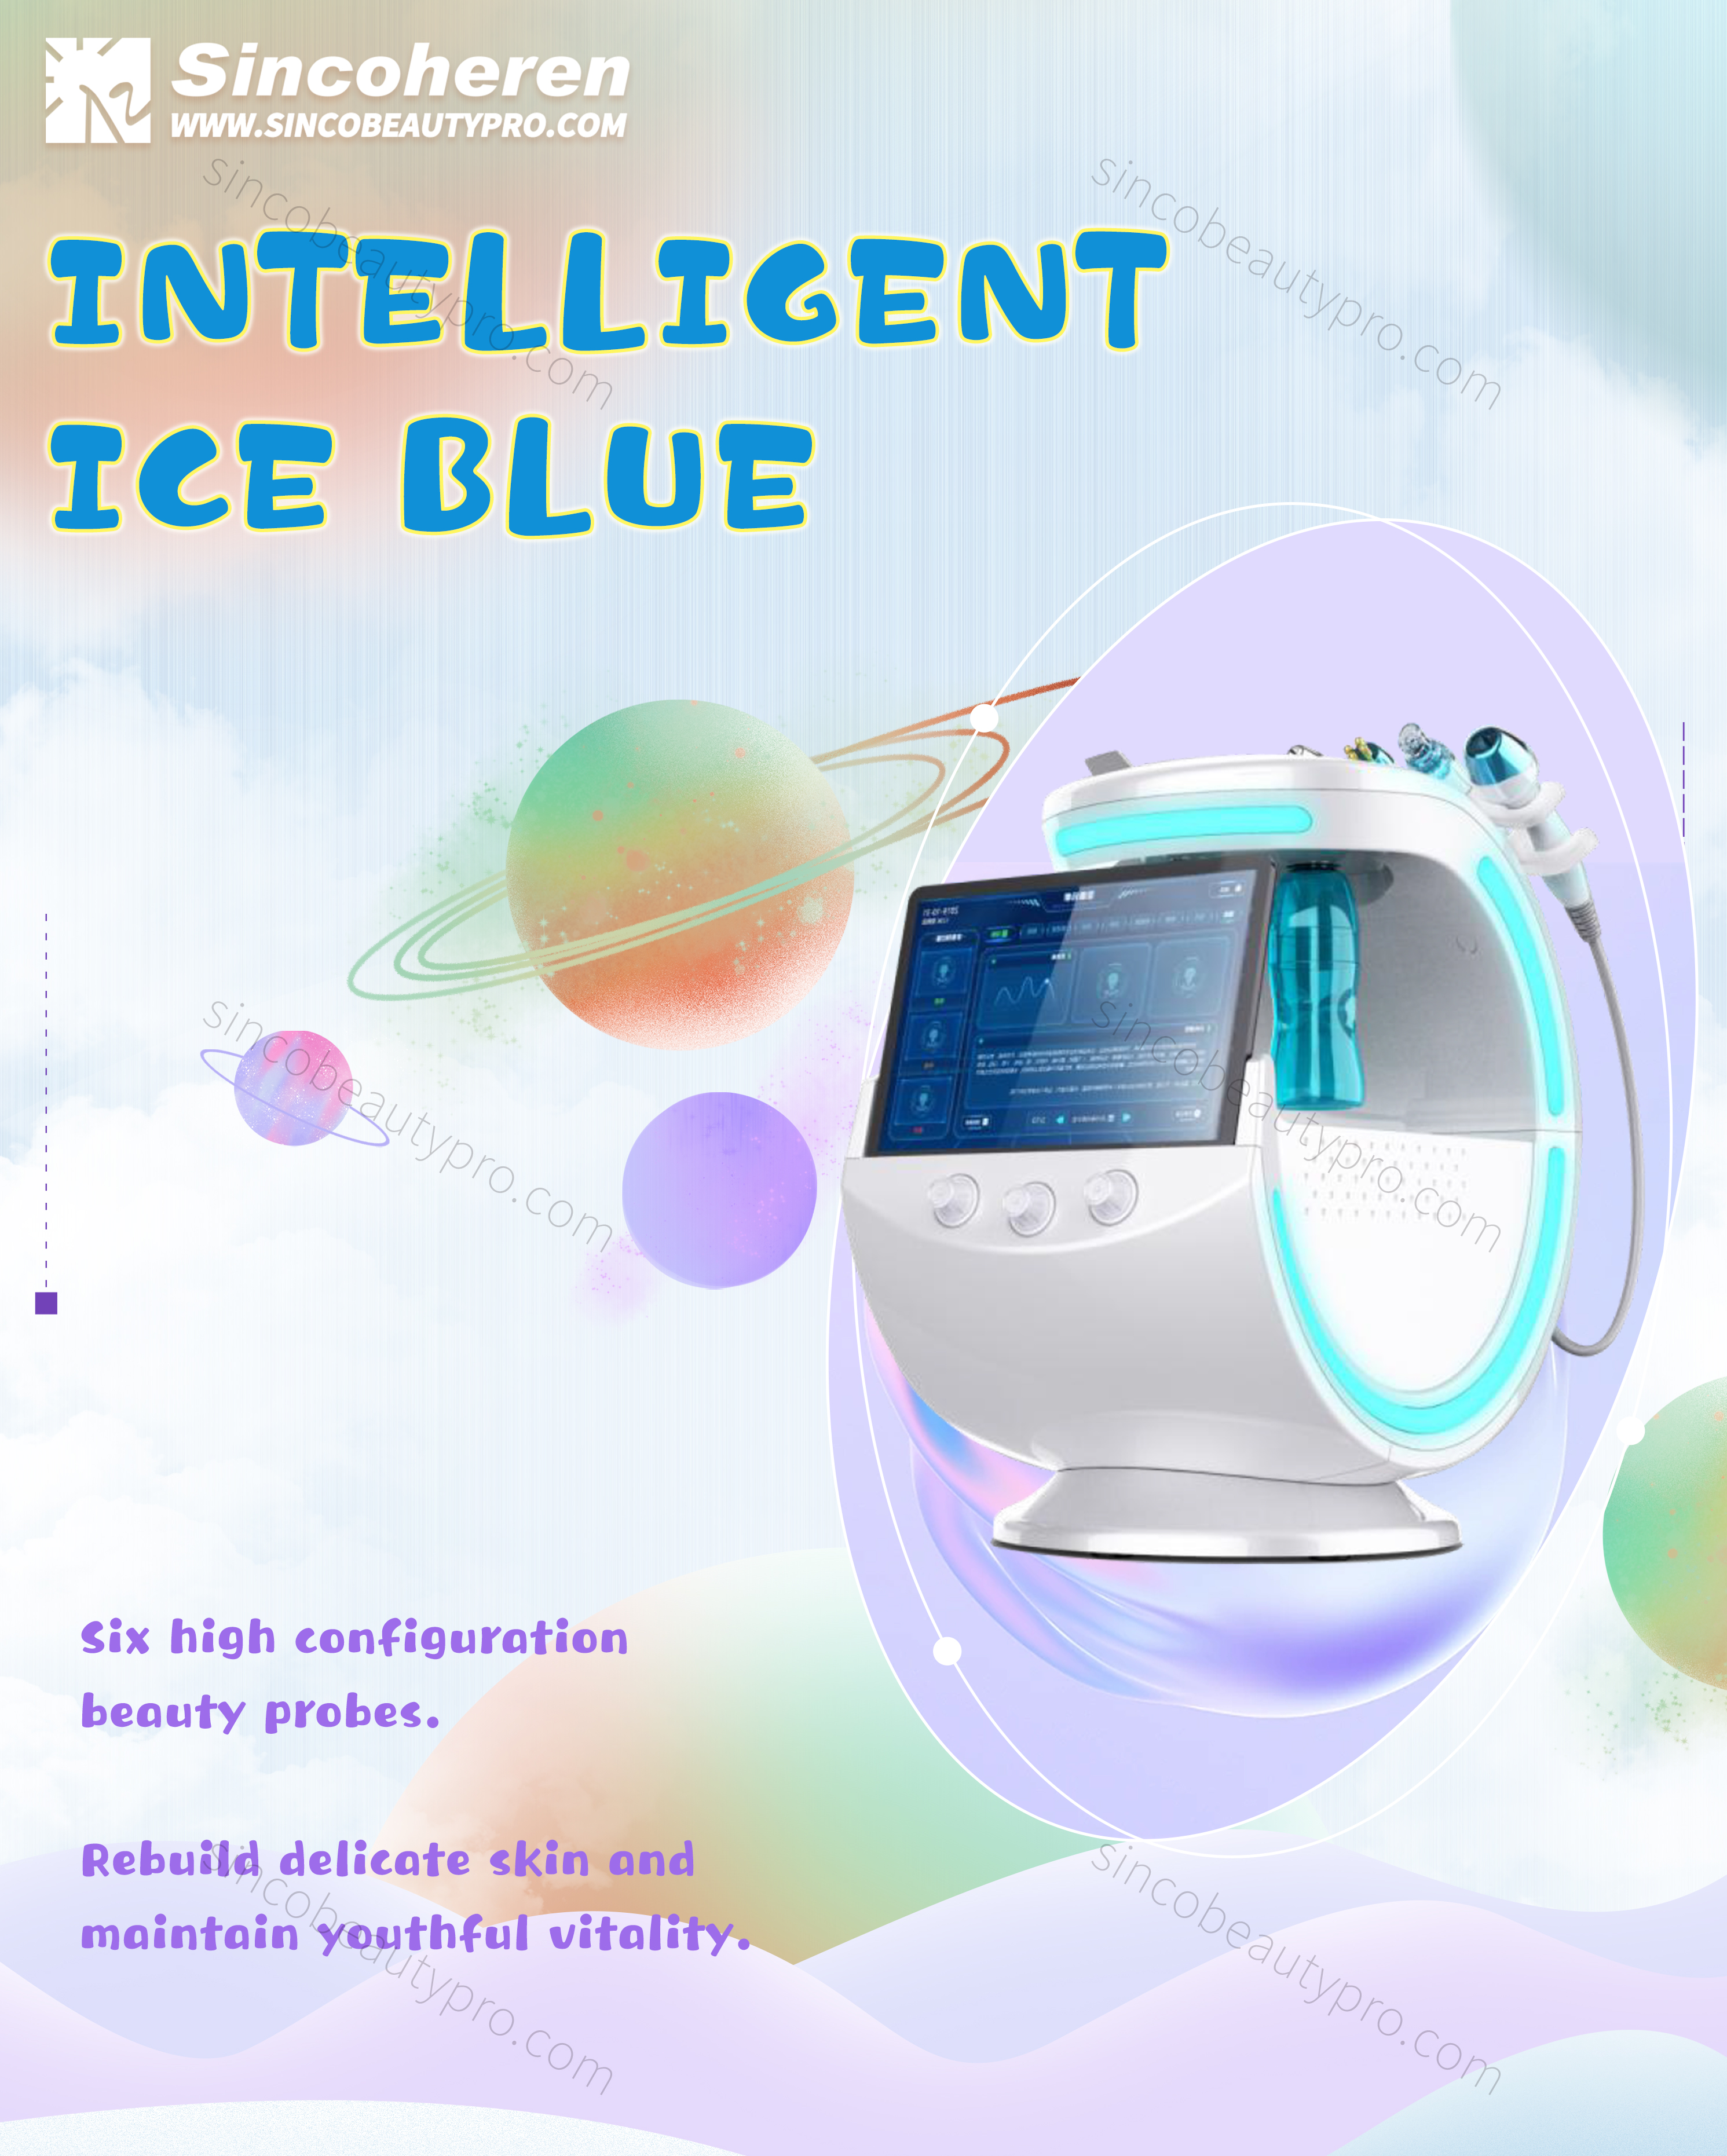 7in1 Portable The Intelligent Ice Blue Skin Management System Pro թողարկում